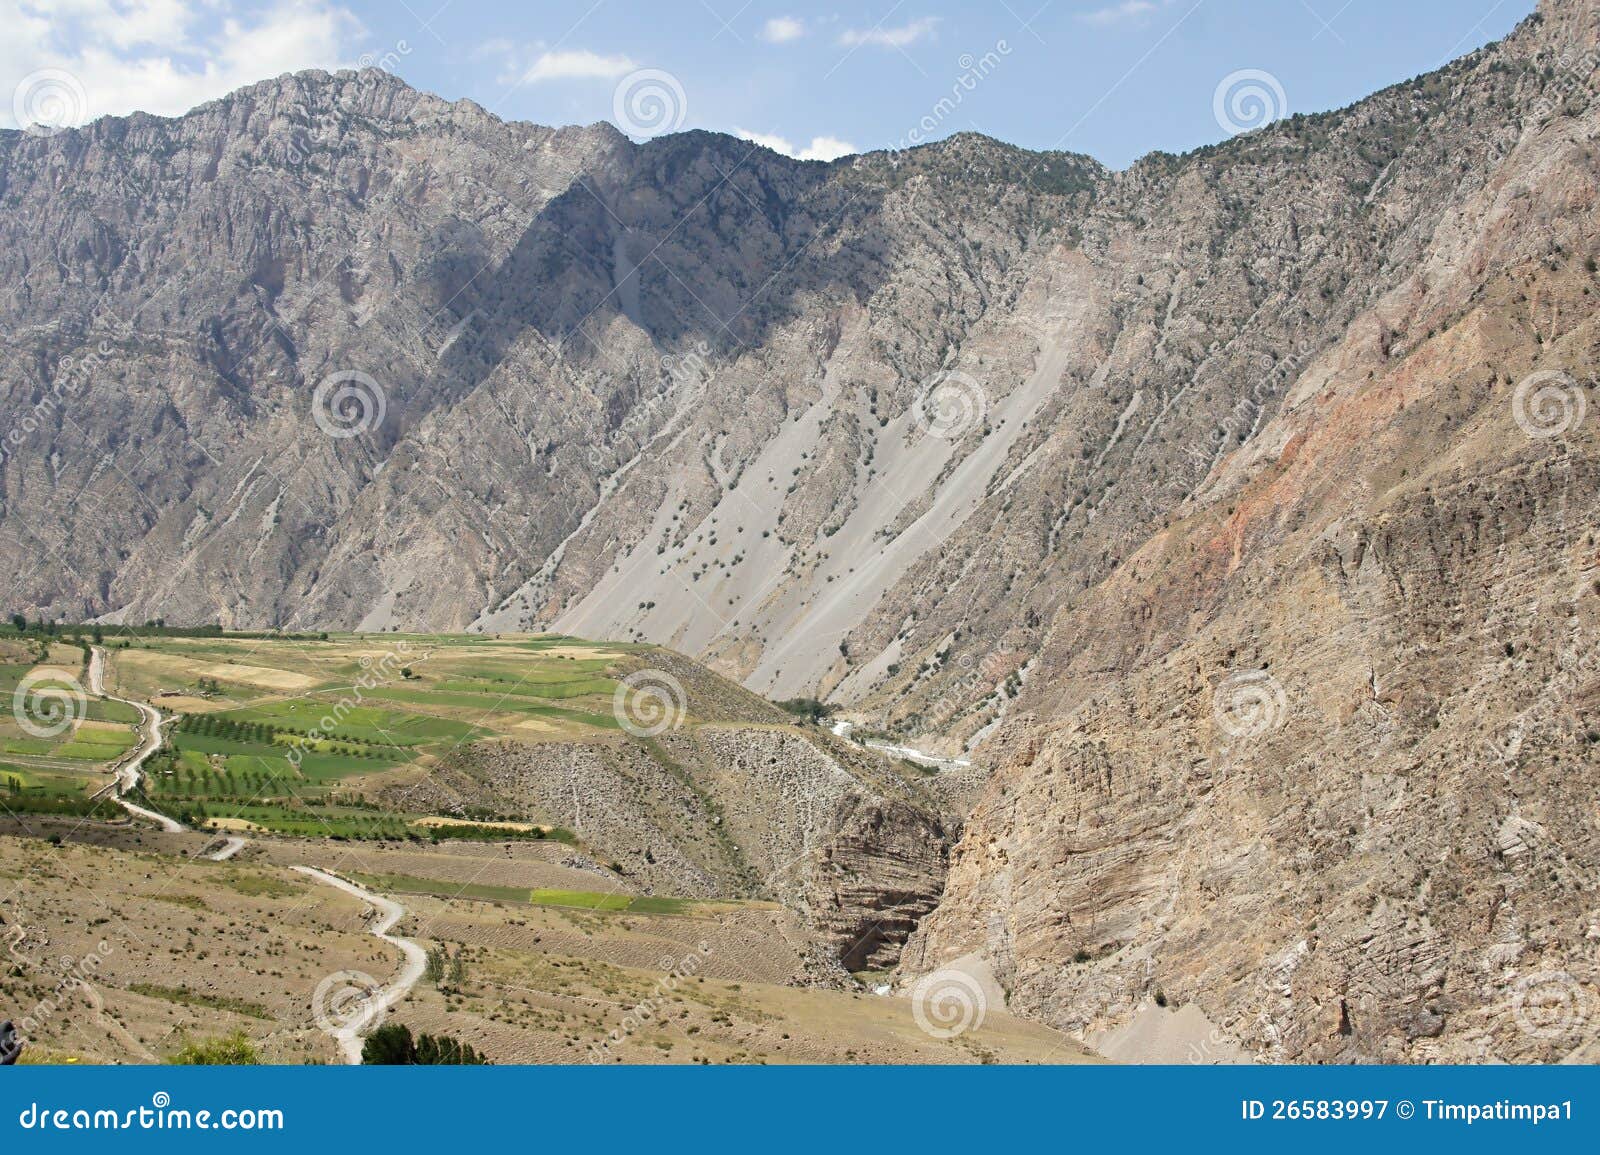 uzbek enclave near mountaineering camp dugoba